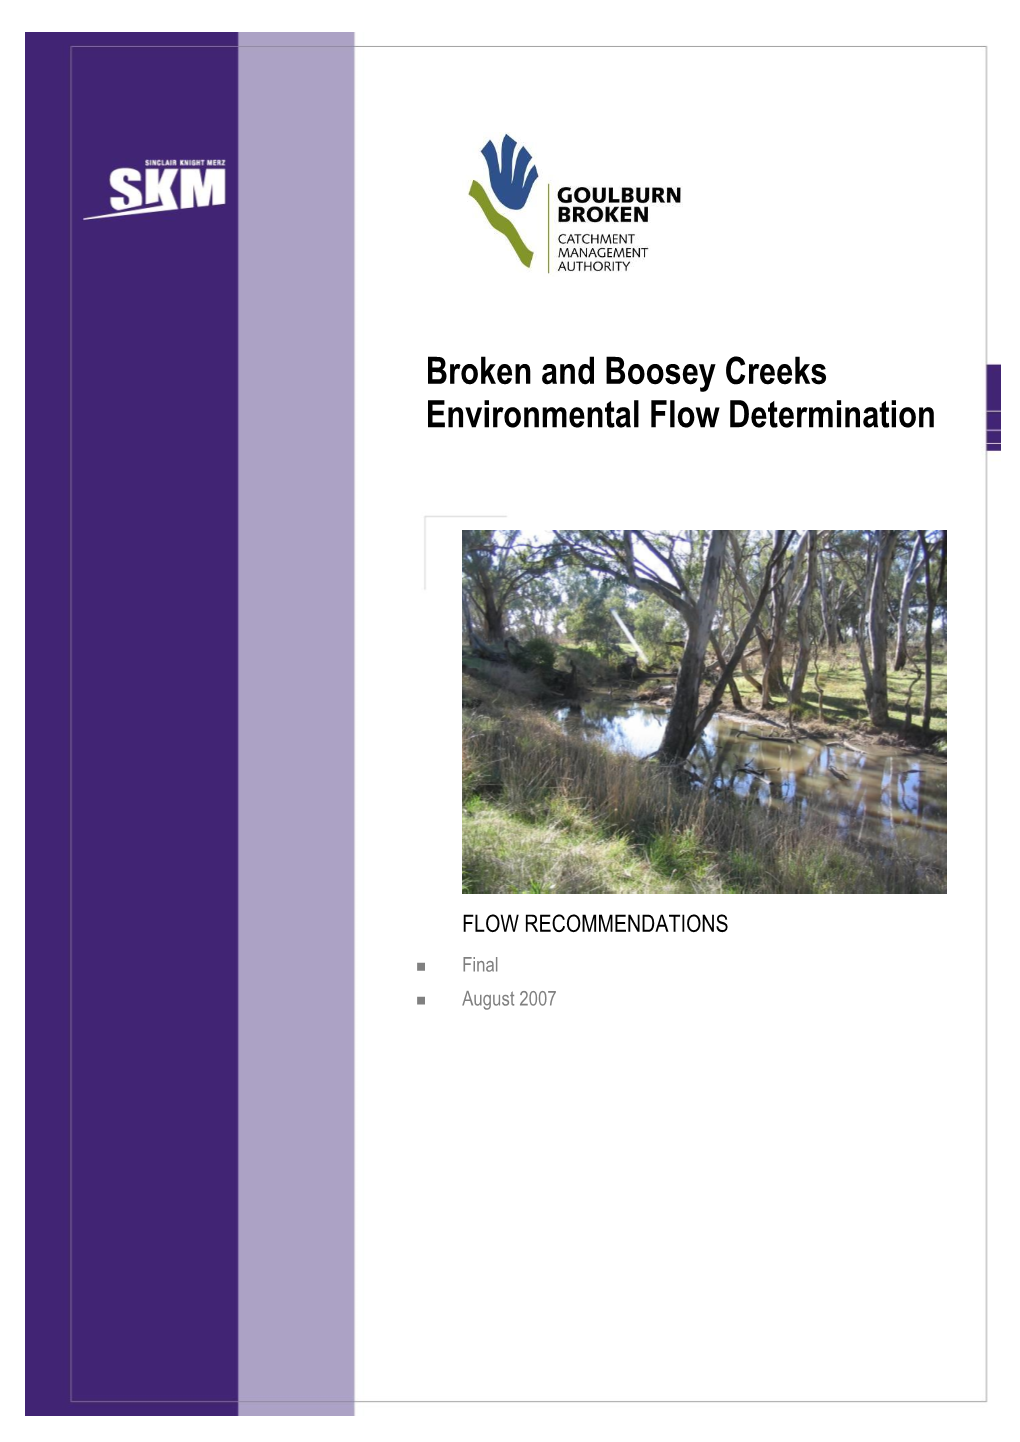 Broken and Boosey Creek Flow Study [PDF File